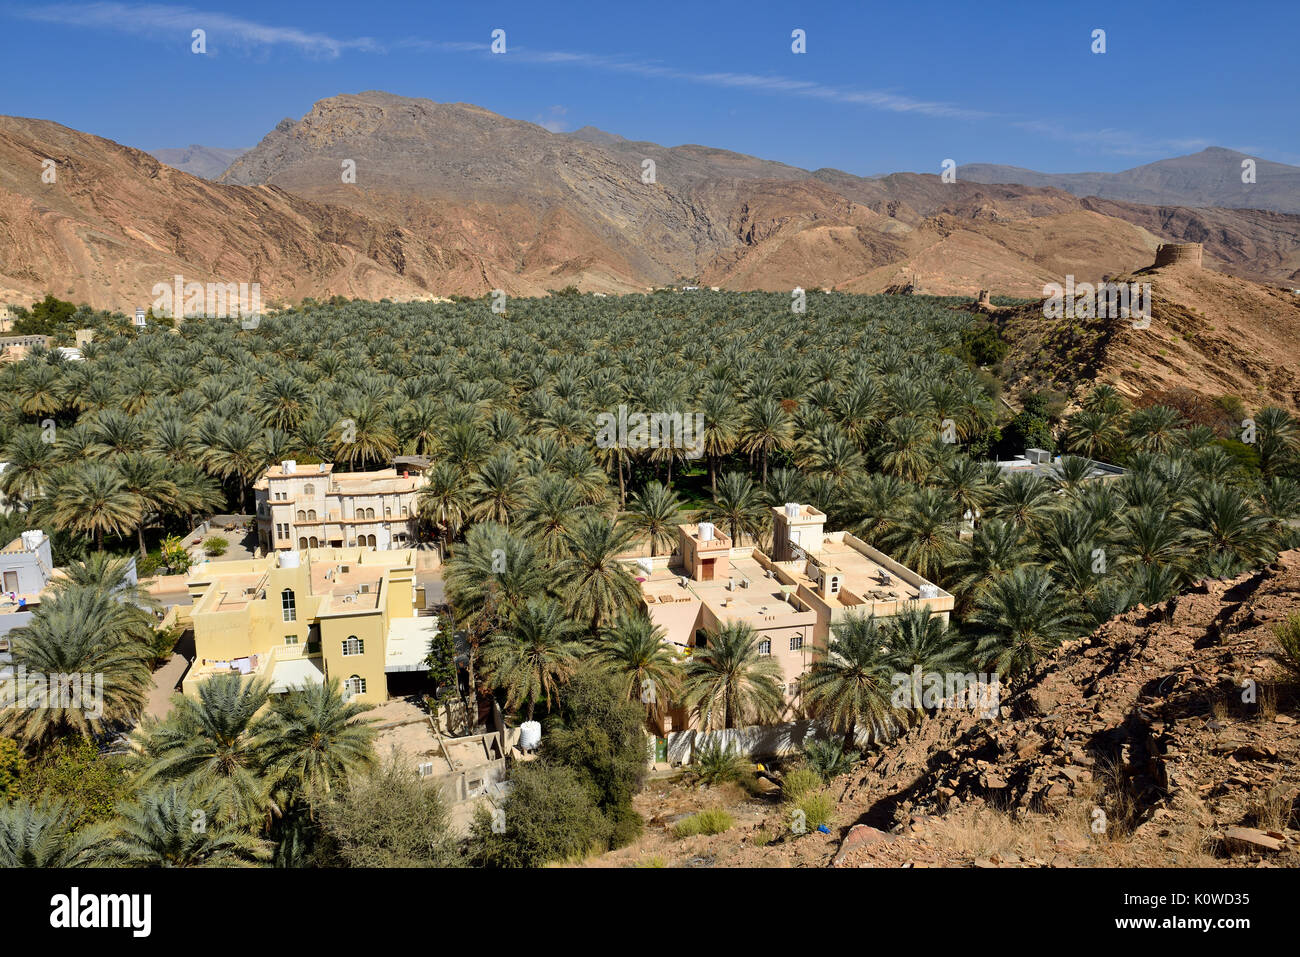 Birkat al Mawz oasis, Hajar al Gharbi mountains, Dakhiliyah, Oman Stock Photo